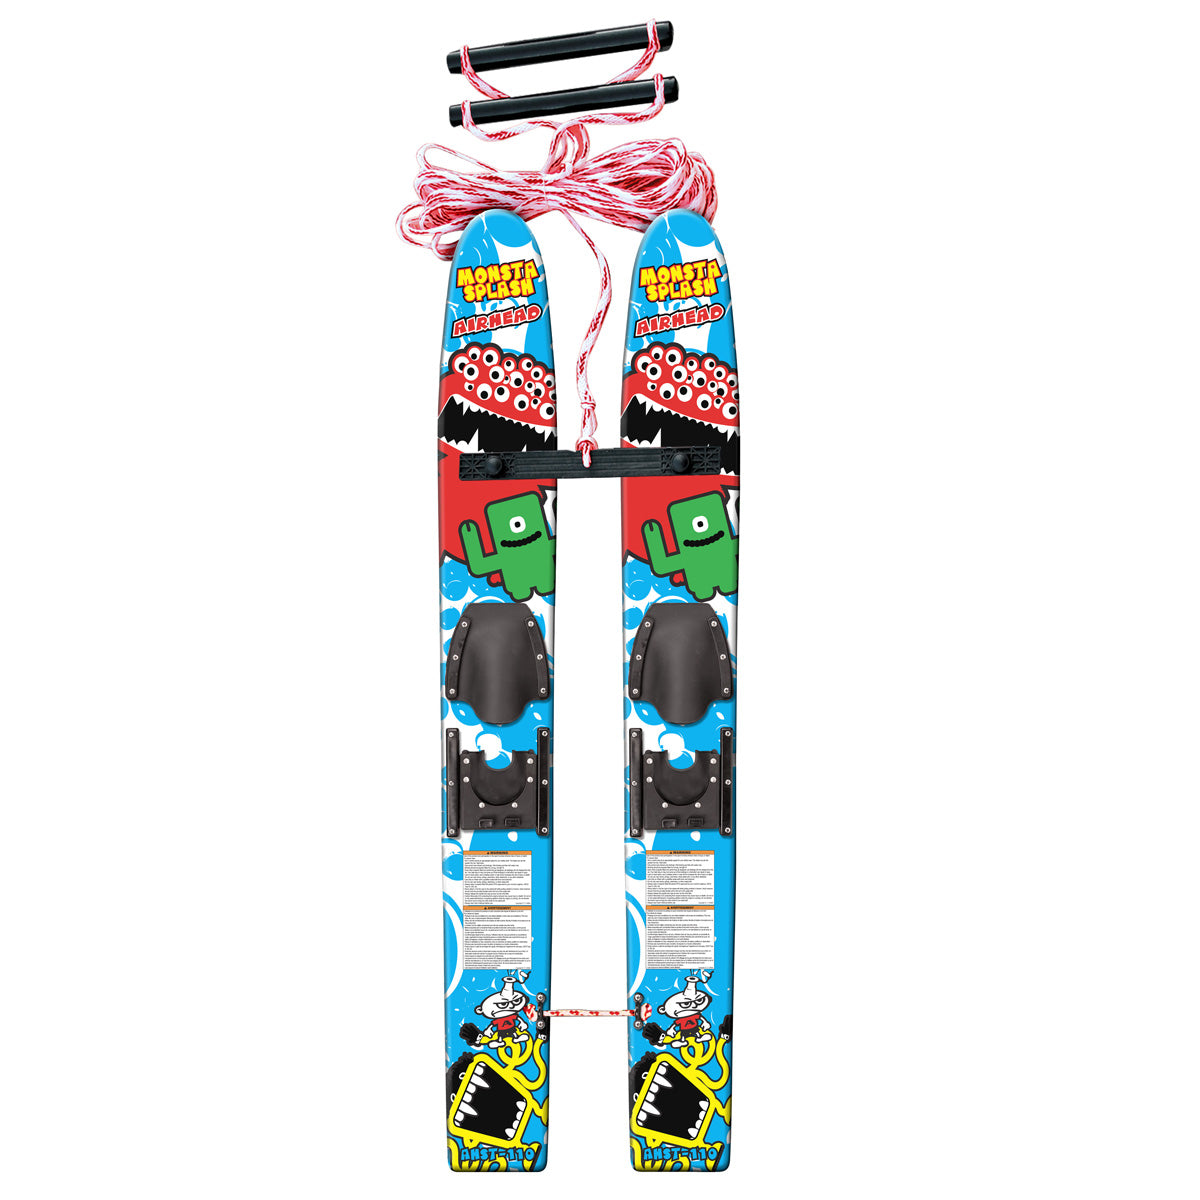 Monsta Splash Trainer Skis – Multicolor, 48in